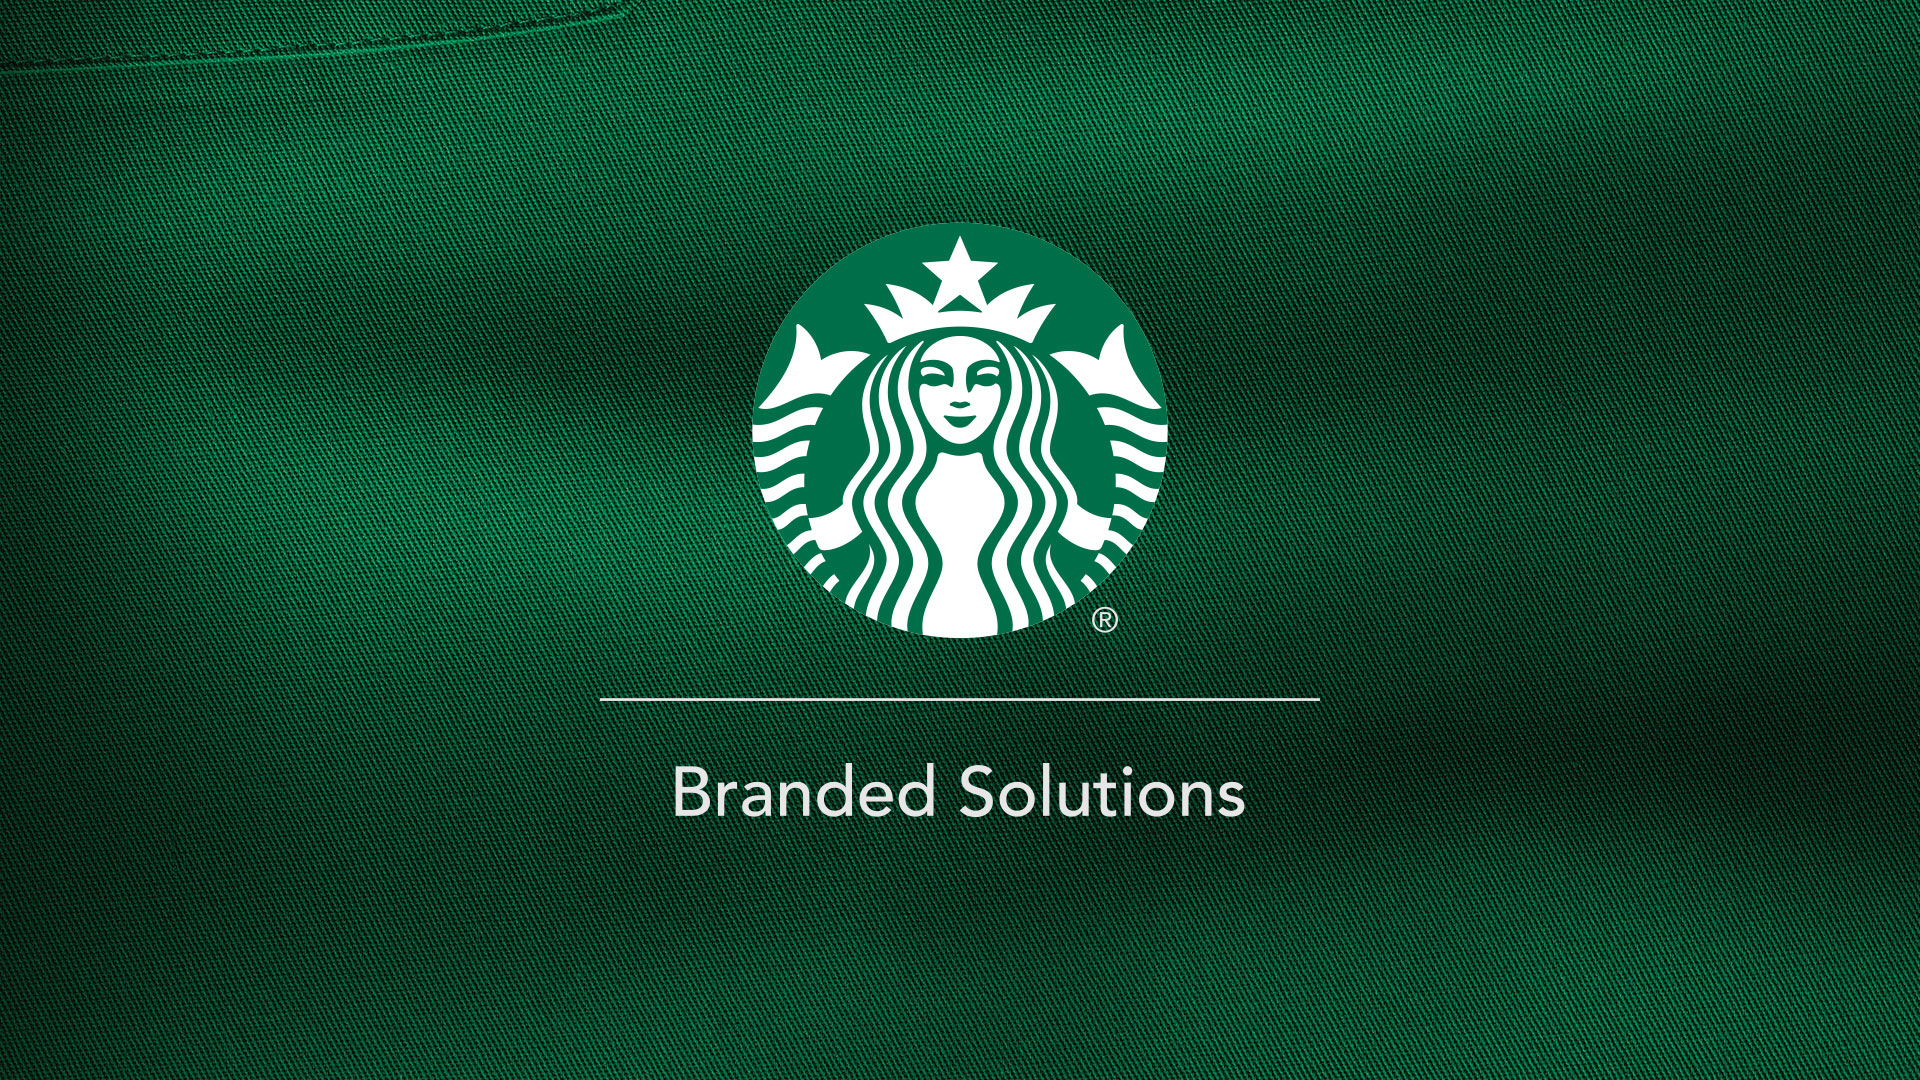 Starbucks Branded Solutions